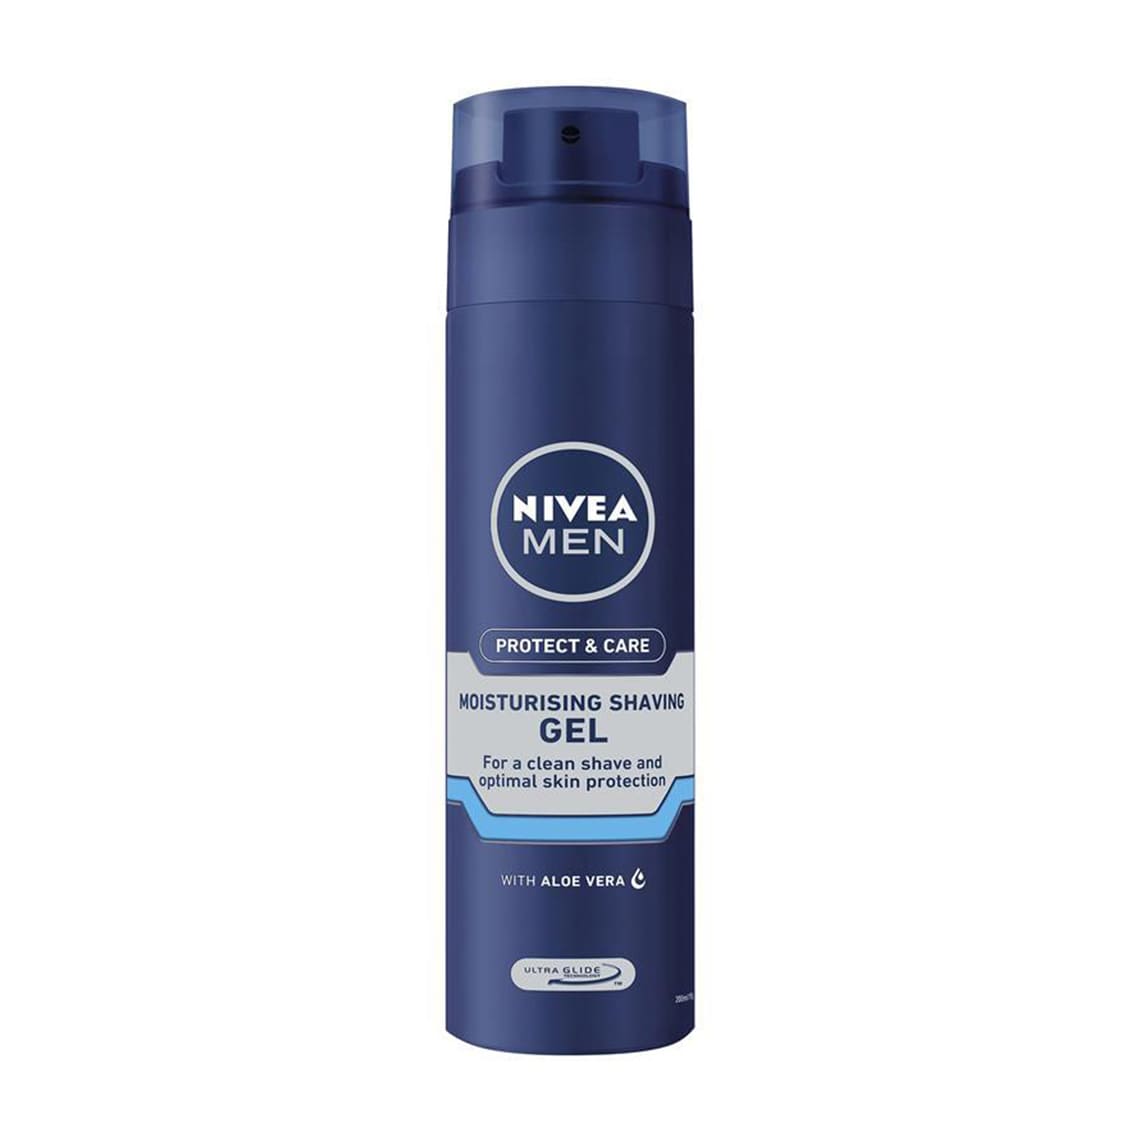 Nivea Men Original Shaving Gel - 200ml - Bloom Pharmacy